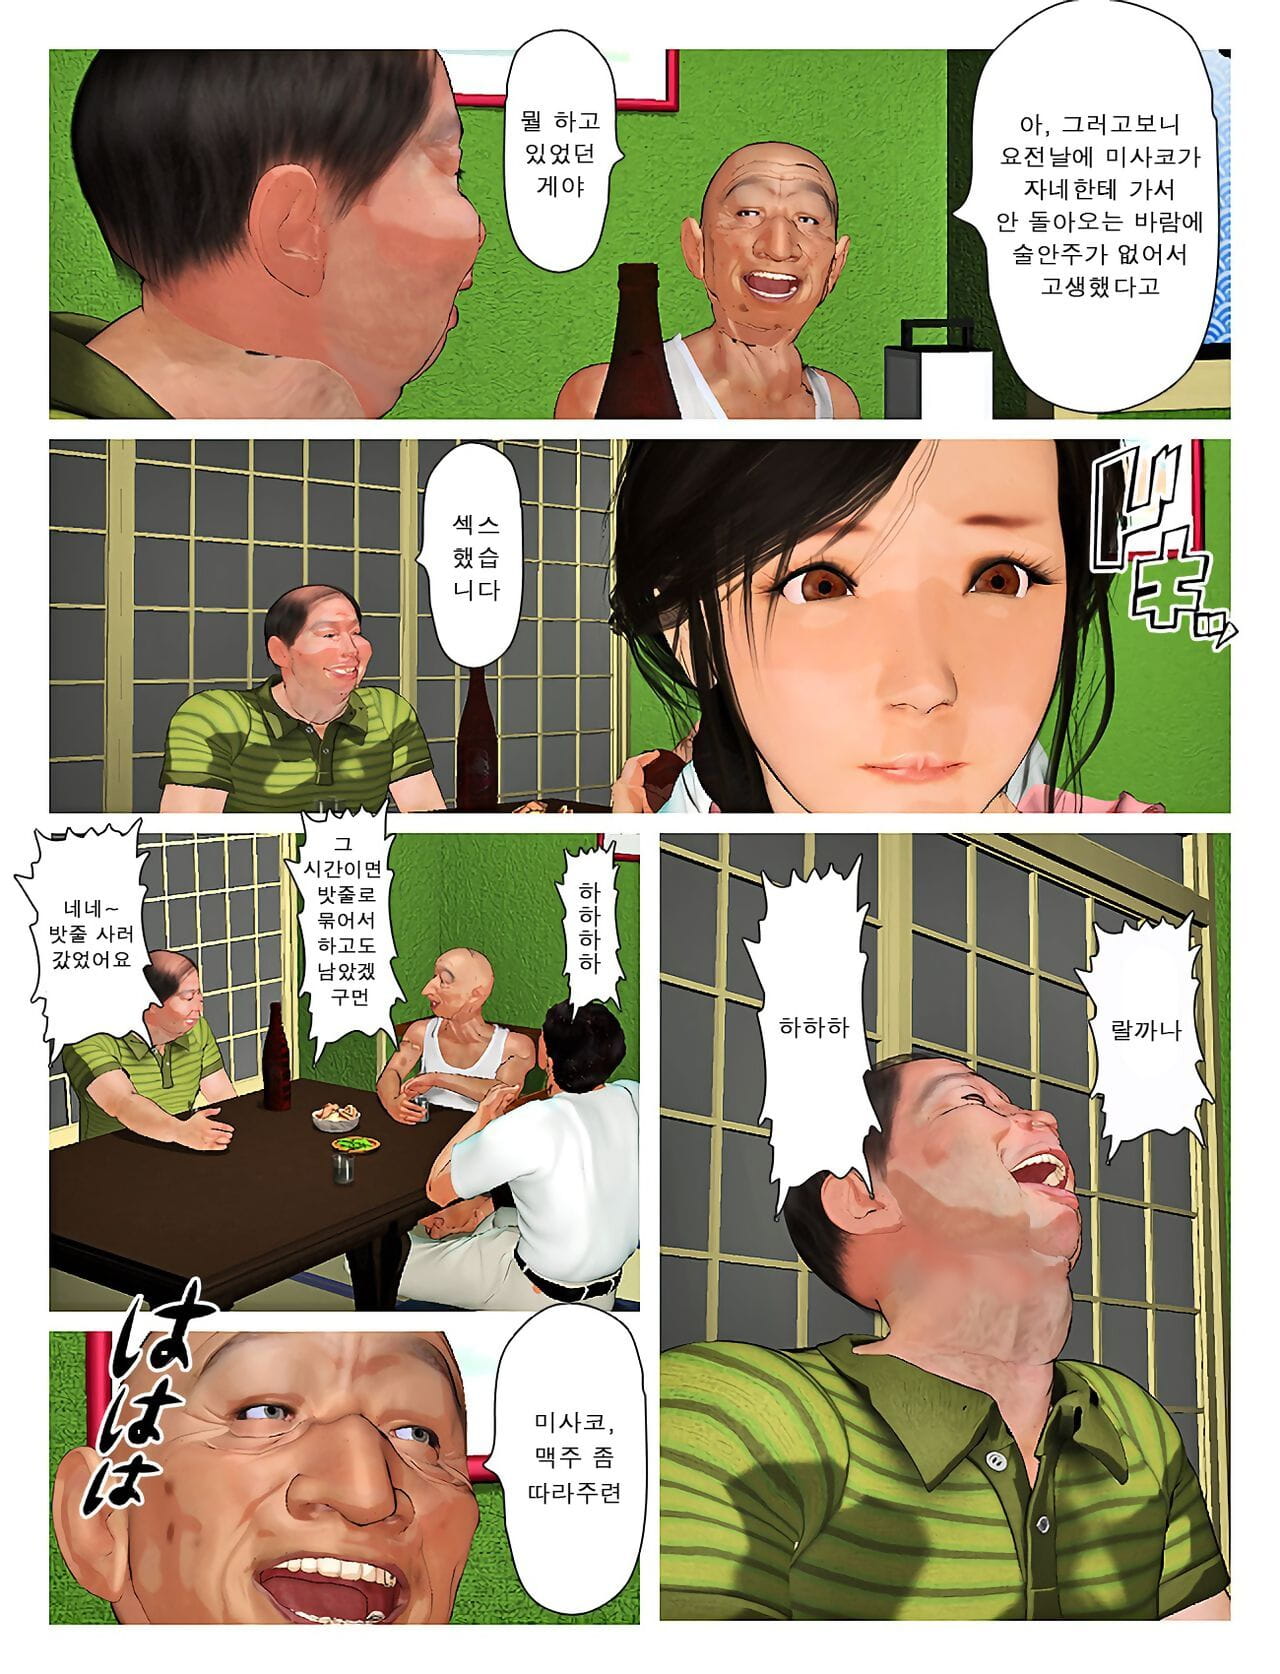 Matar o Rei kyou nenhum misako san 2019:3 오늘의 미사코씨 2019:3 Coreano parte 2 page 1